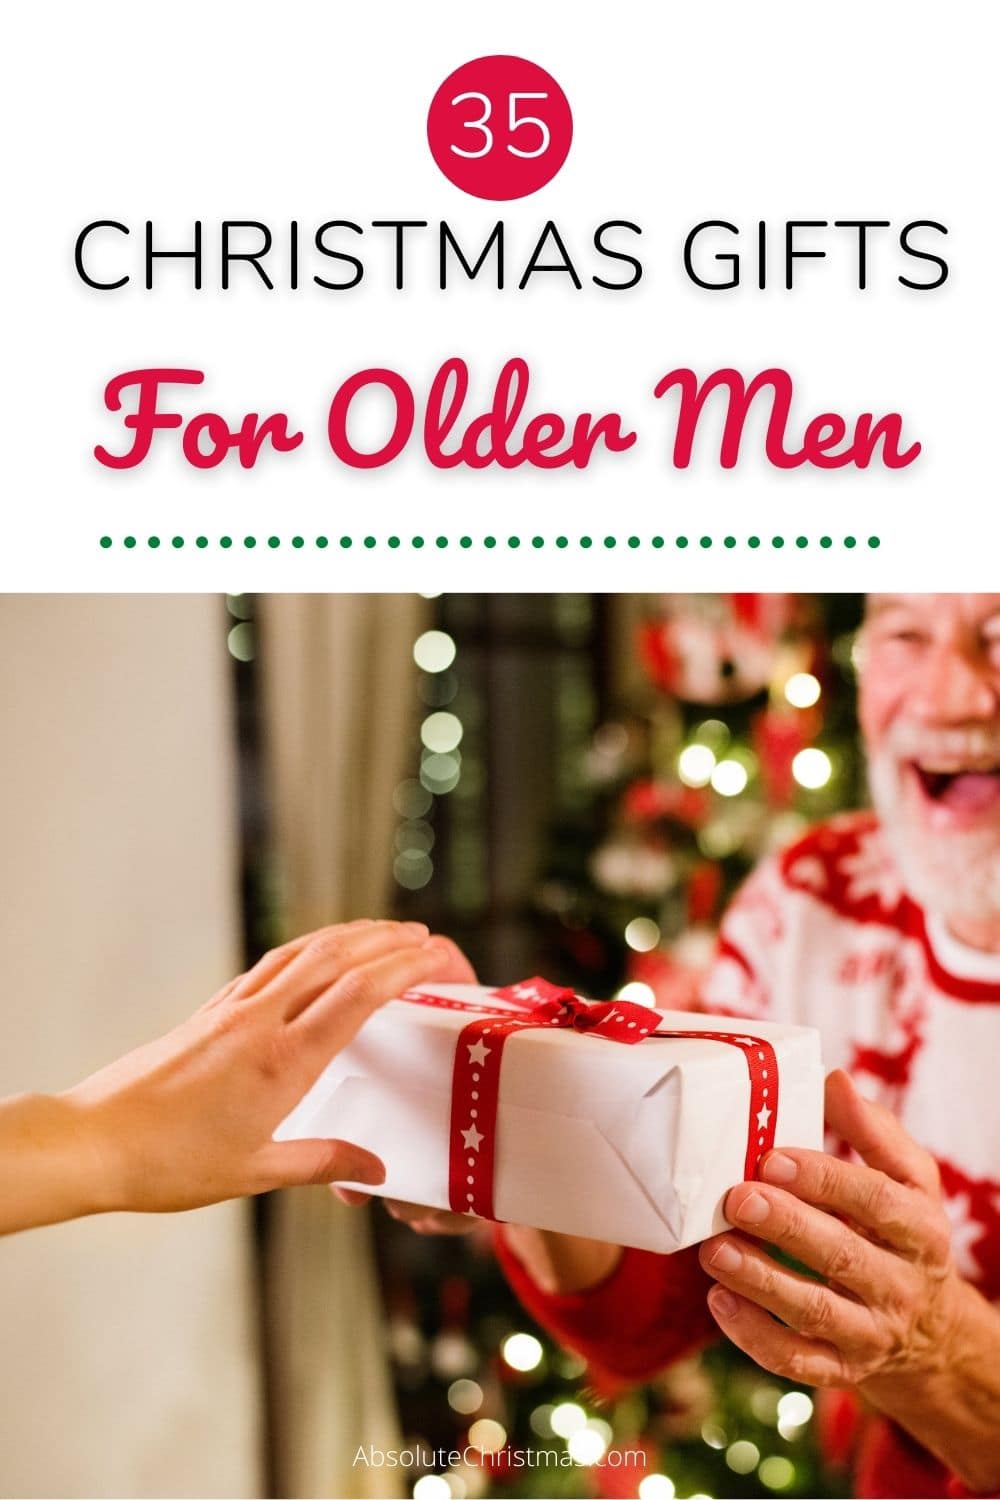 Best Christmas Gifts for Men Over 50 - Christmas Presents for Older Men